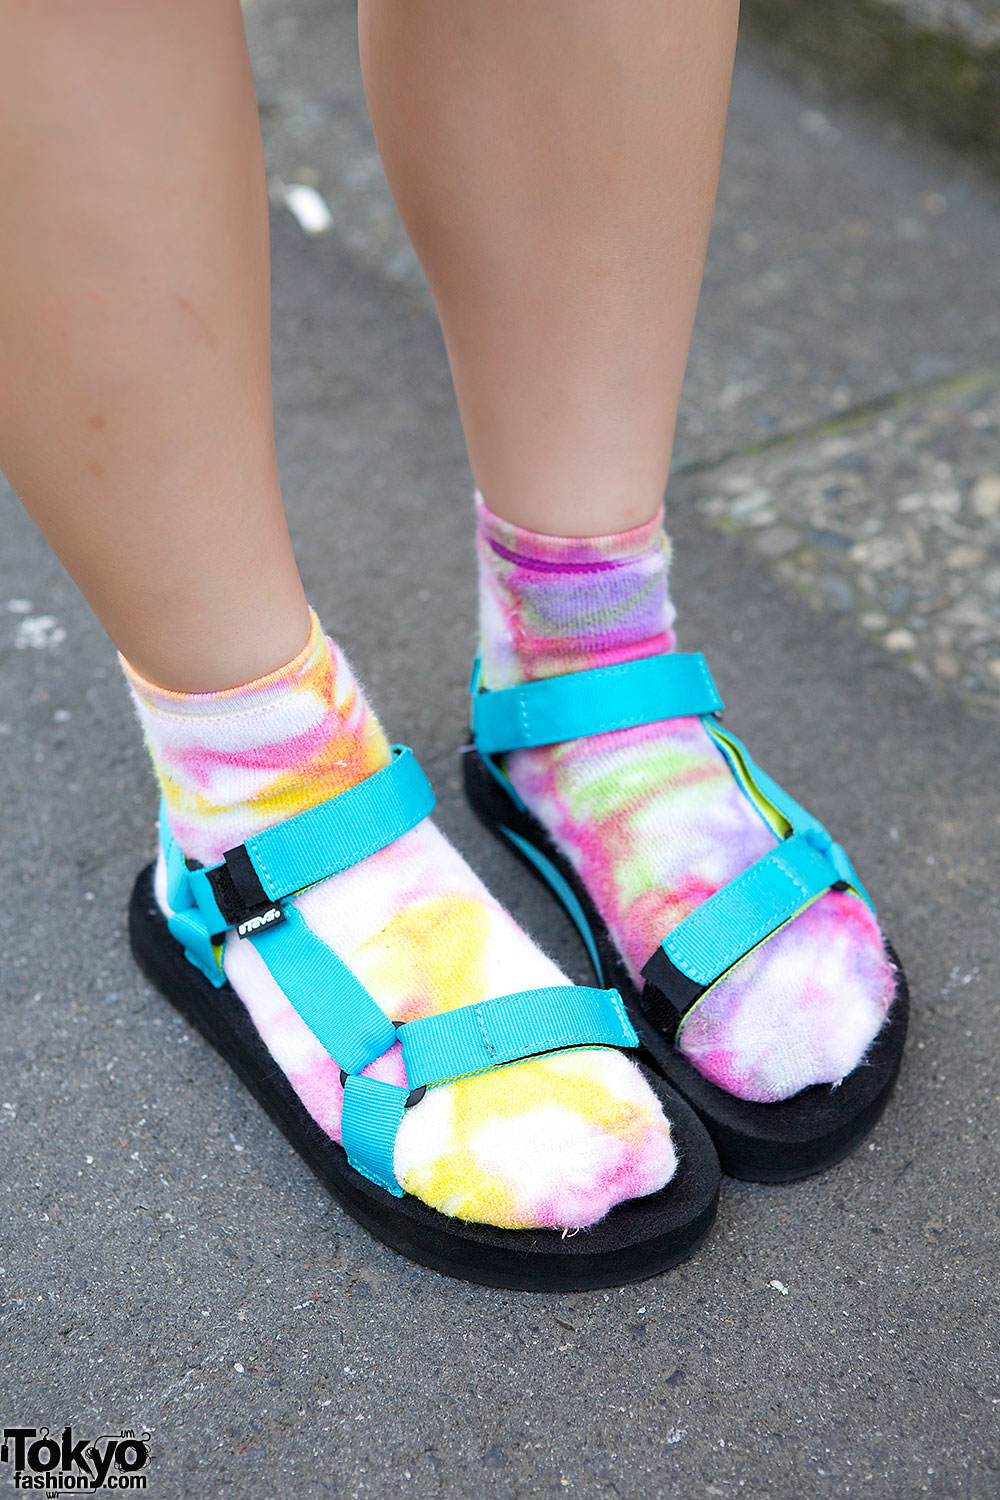 Teva Sandals with Socks